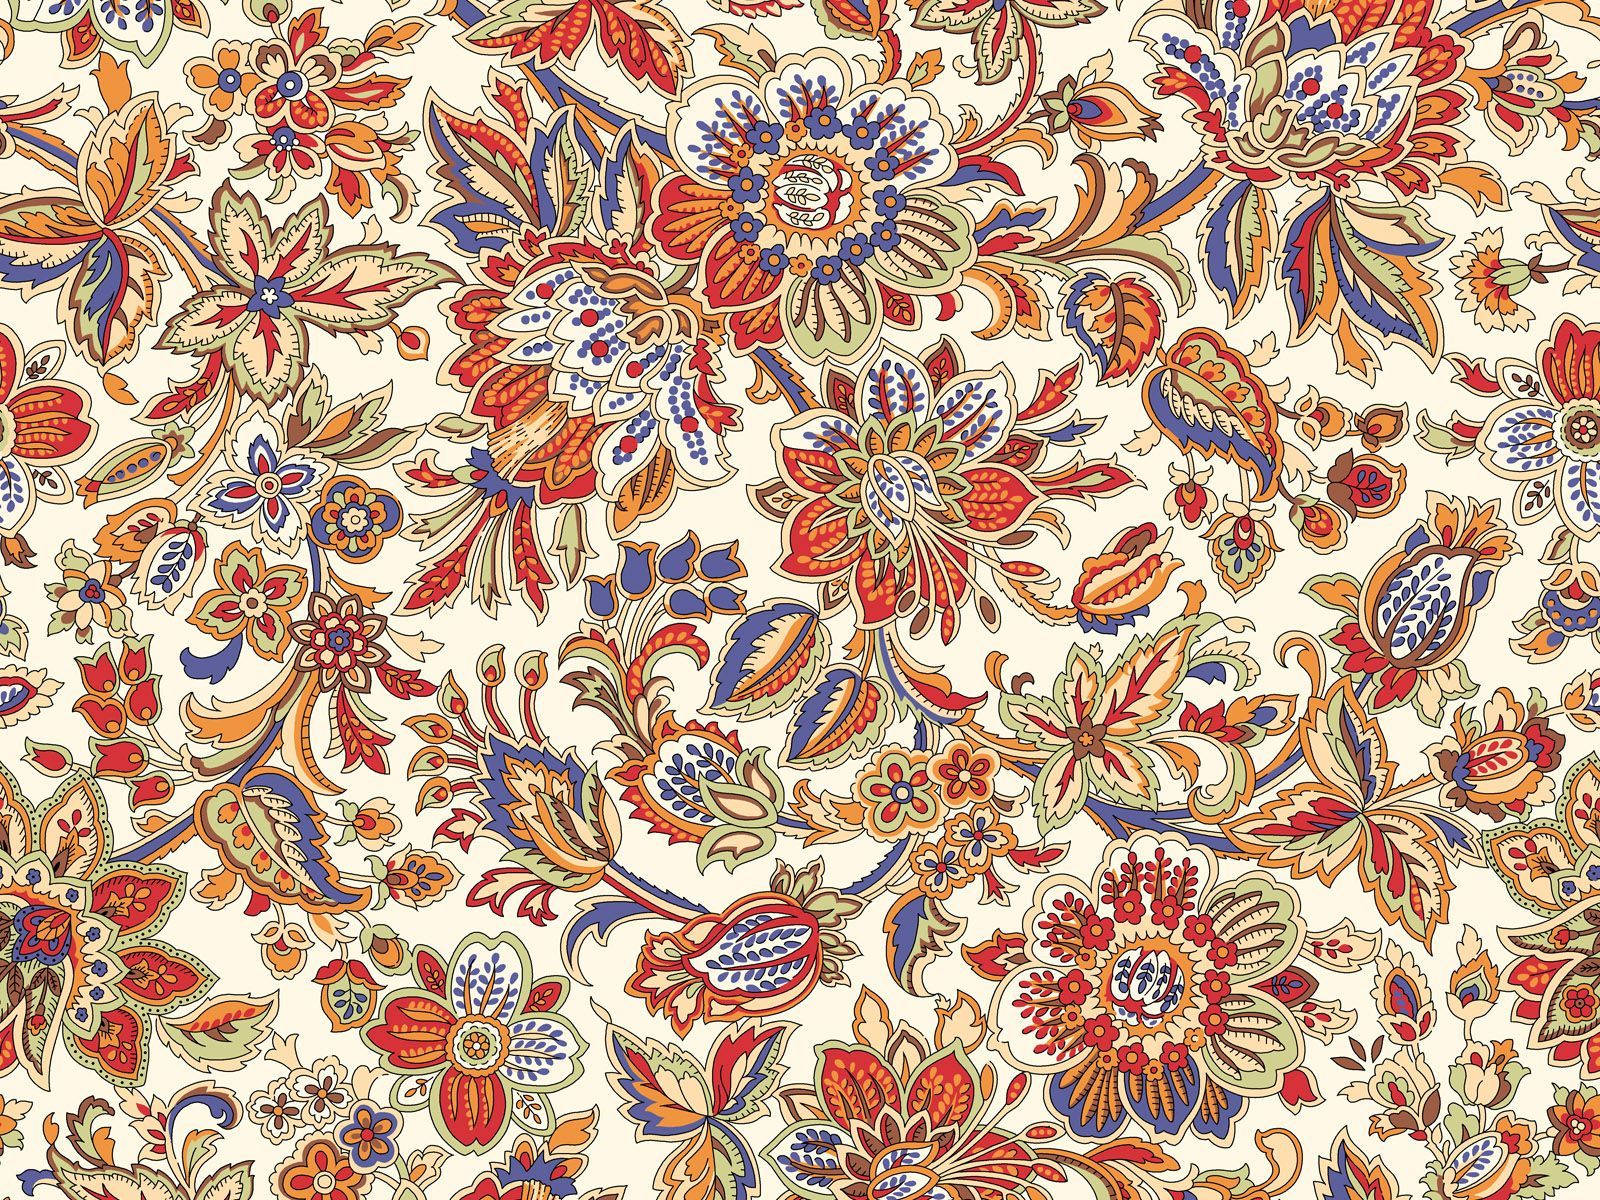 Caption: Exquisite Batik Pattern In Vivid Orange And Brown Shades Wallpaper